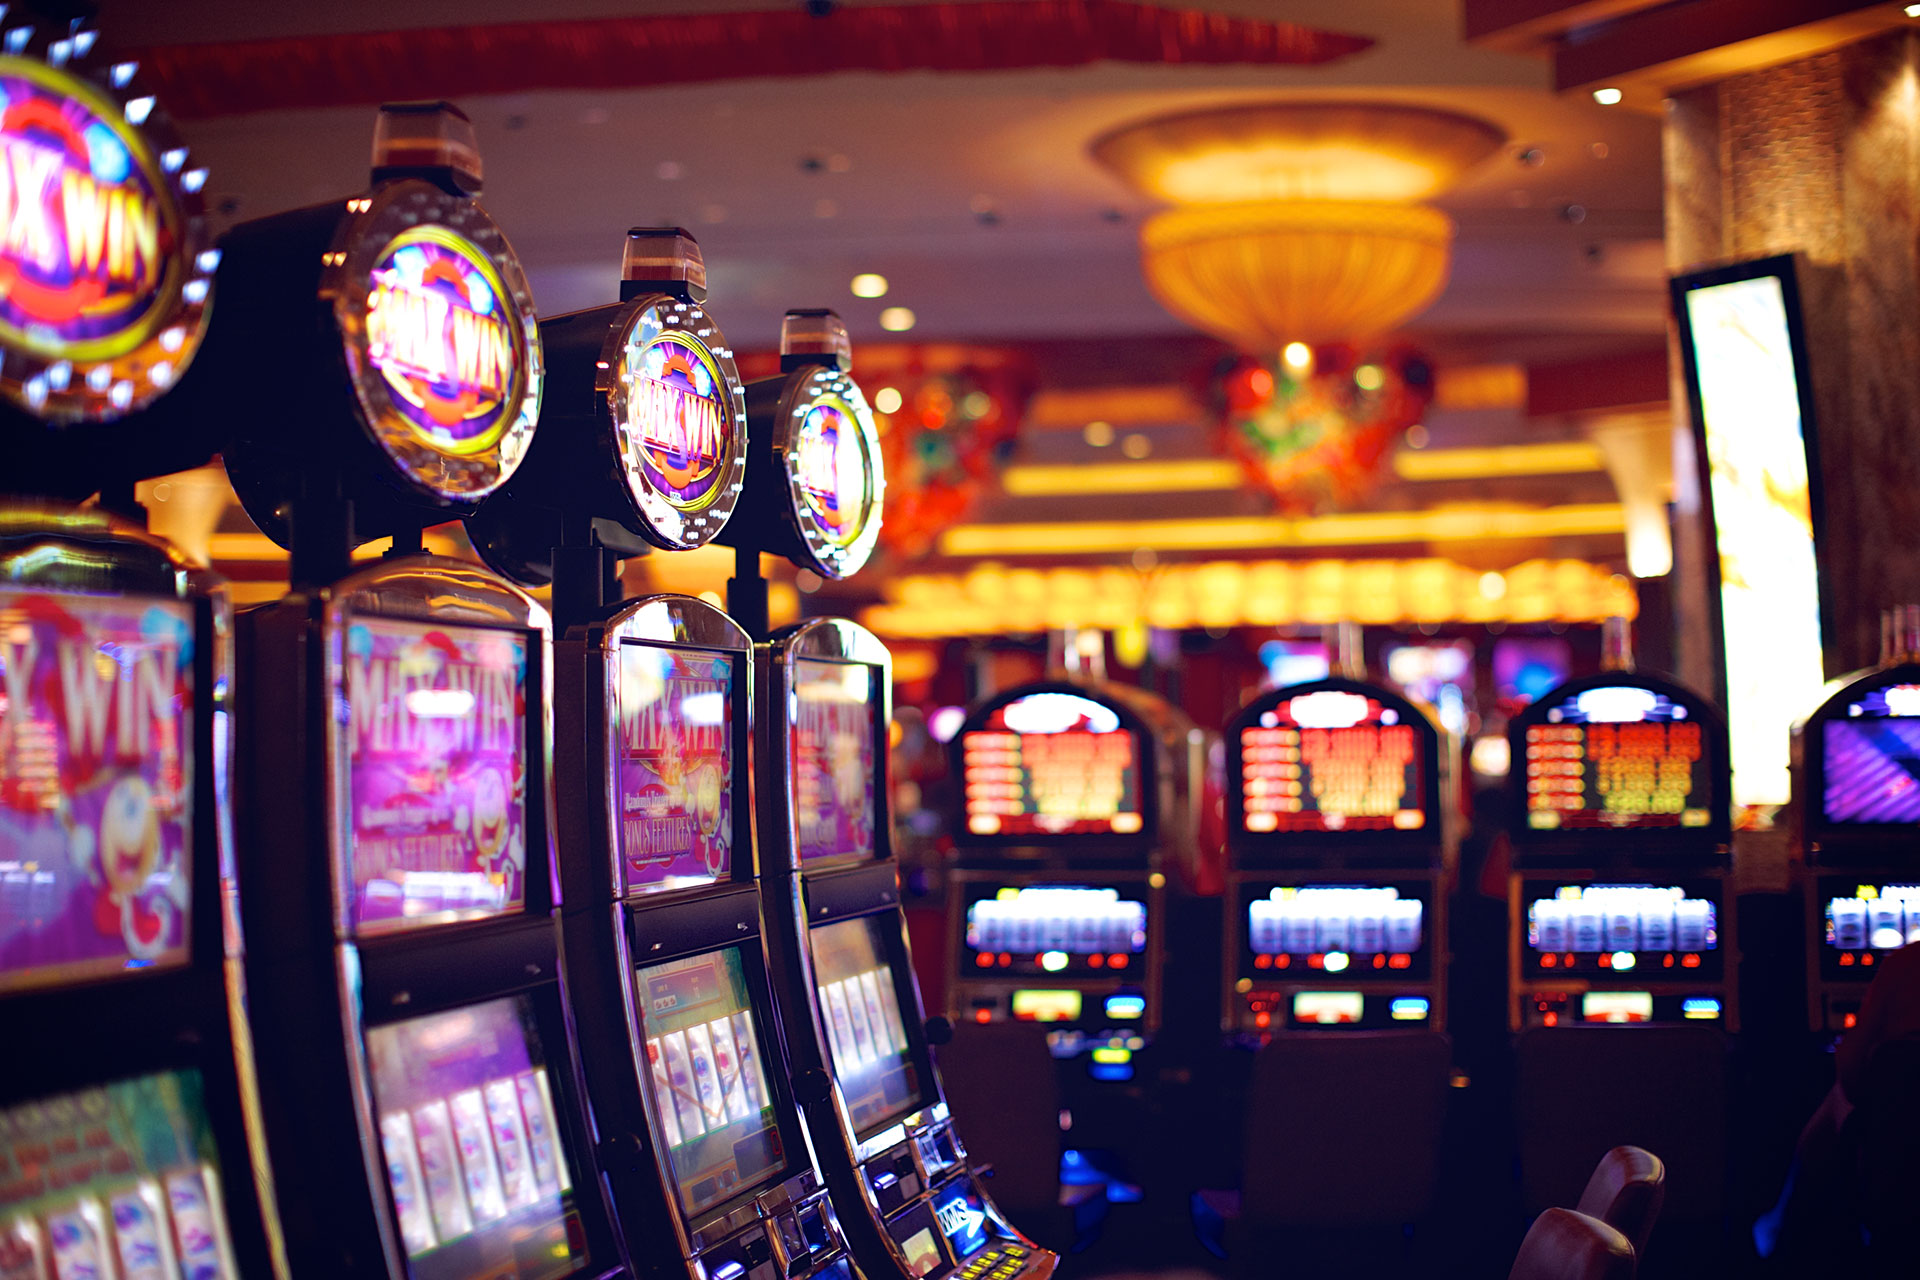 Internet Casino Slots – The Merging Option for Online Entertainment